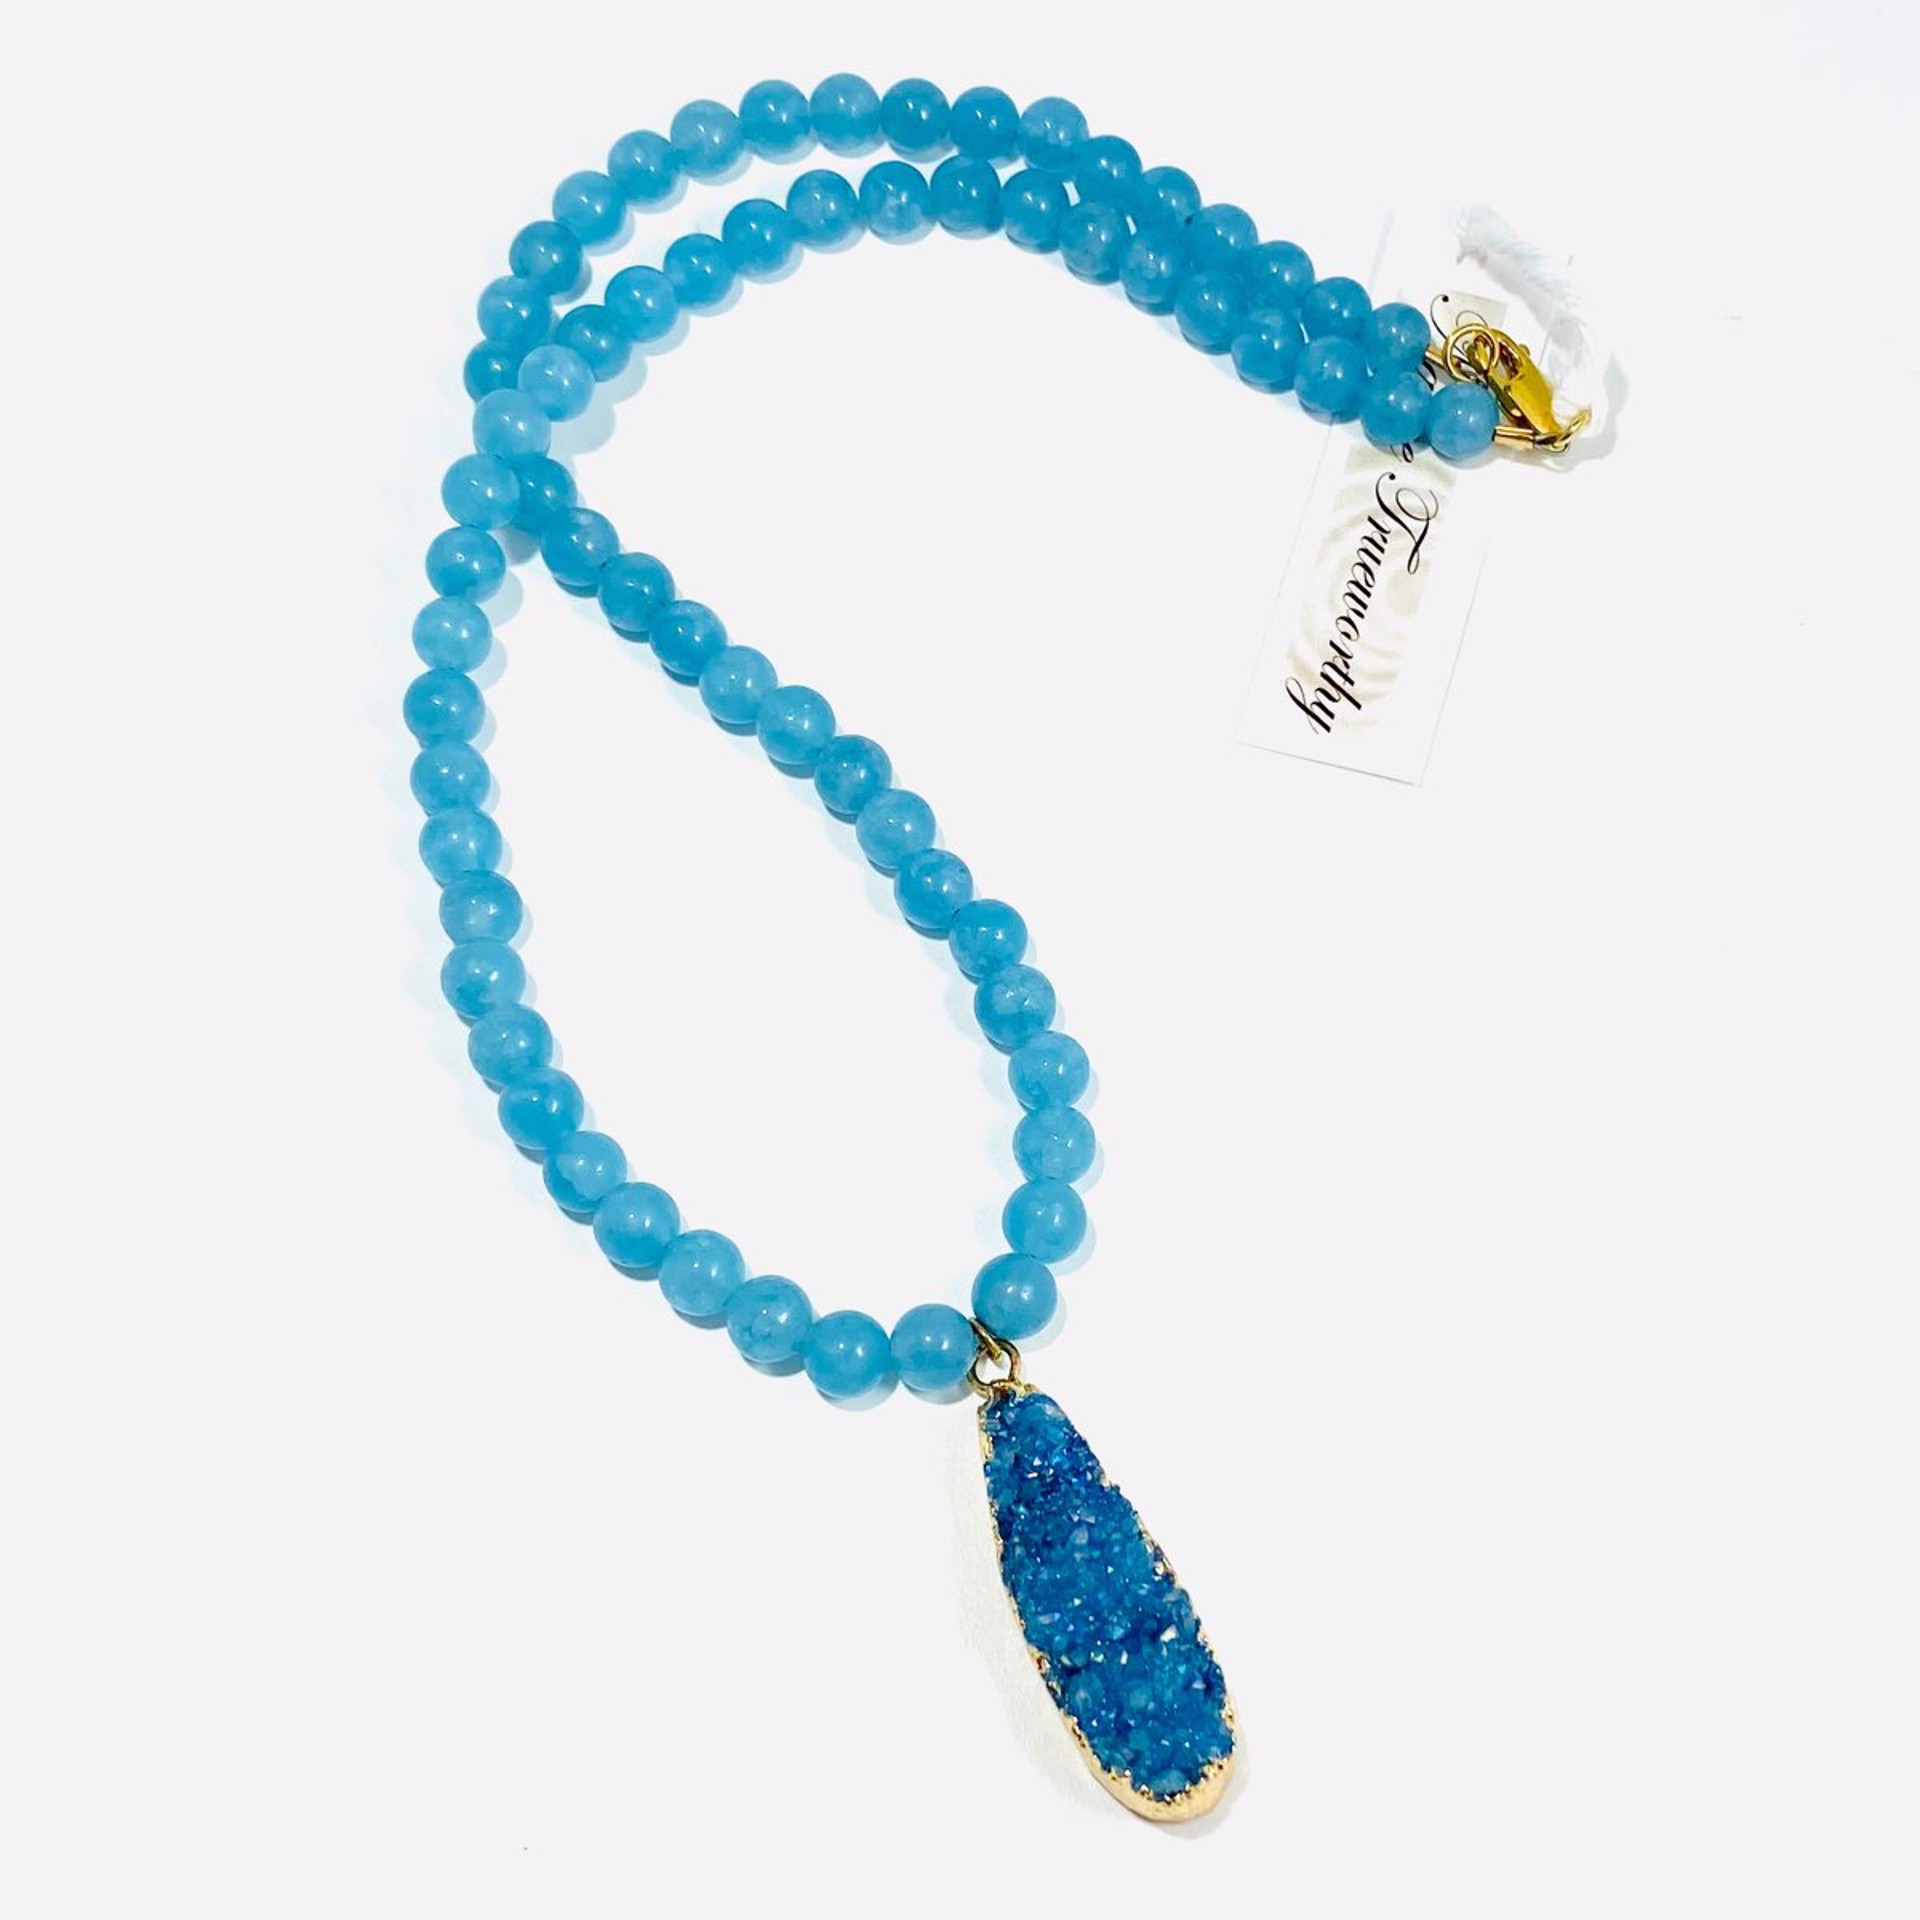 NT22-91 Slim Oval Blue Druzy Pendant Blue Jade Bead Necklace by Nance Trueworthy